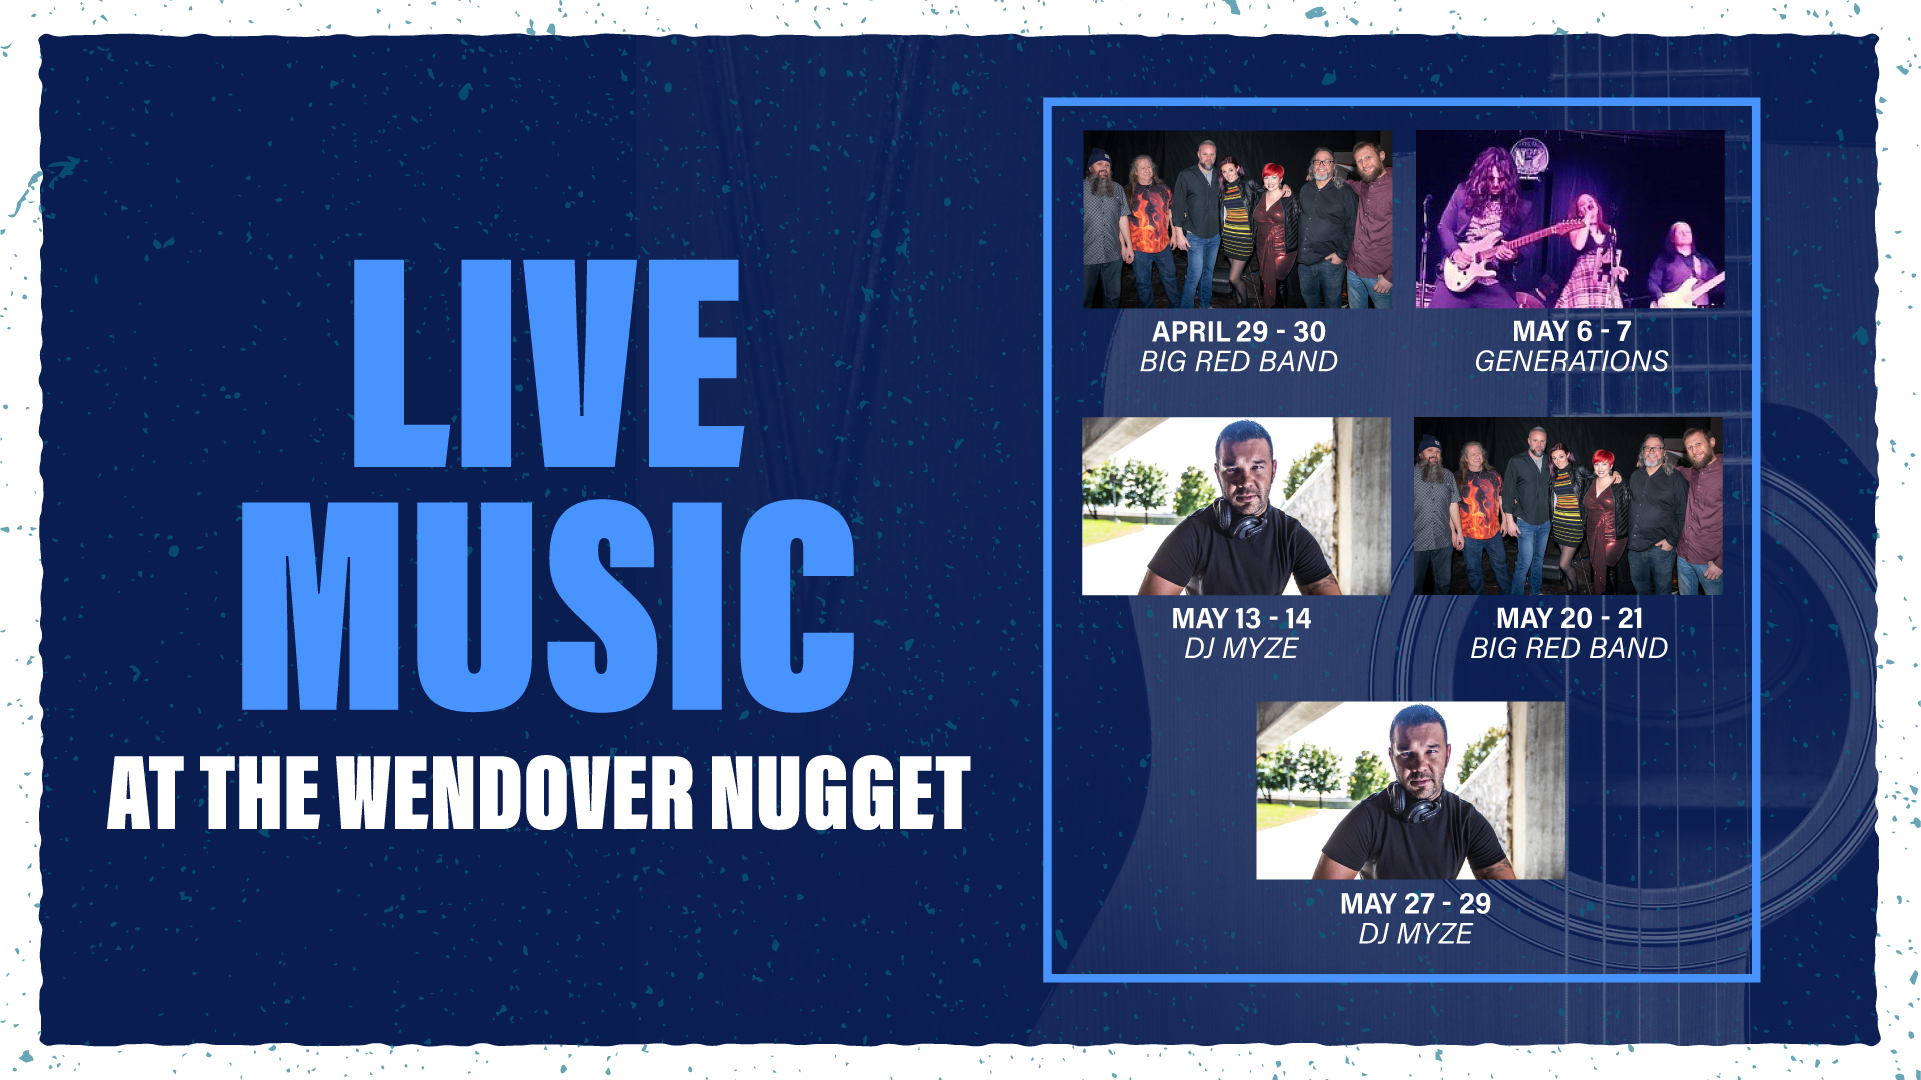 Live Music At The Wendover Nugget April 29-30: Big Red Band May 6-7: Generations May 13-14: DJ Myze May 20-21: Big Red Band May 27-29: DJ Myze